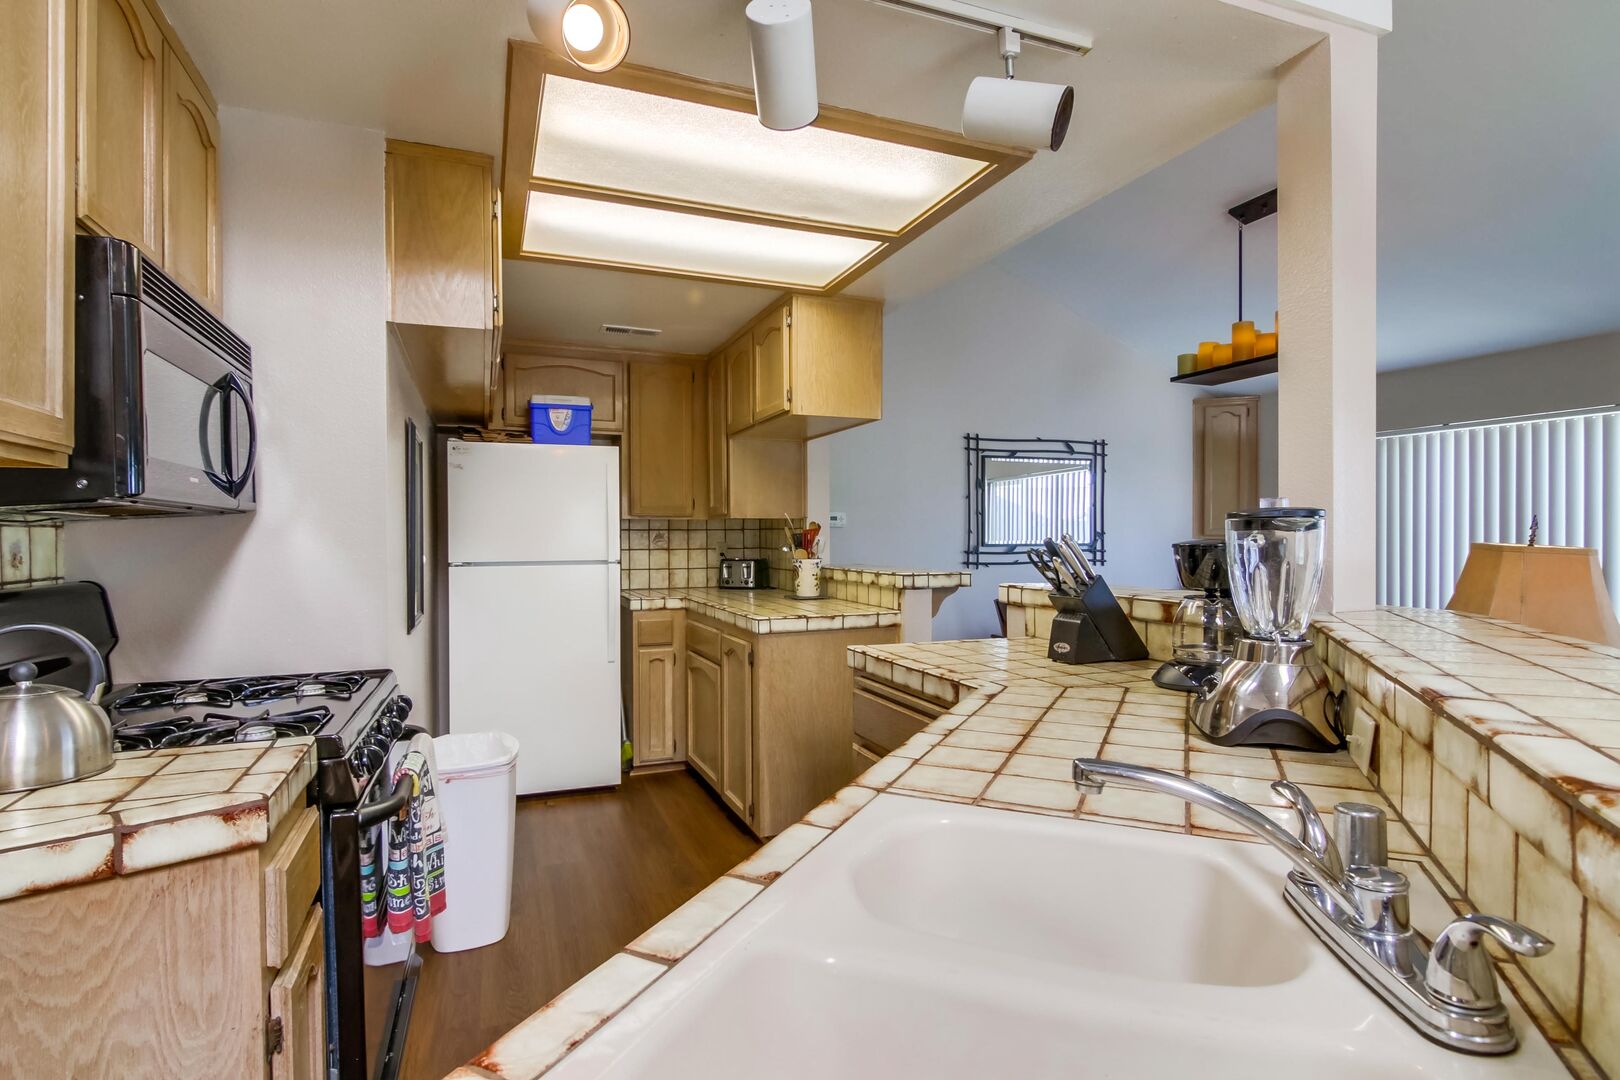 Kitchen with refrigerator, toaster, microwave, overhead lighting, sink, blender